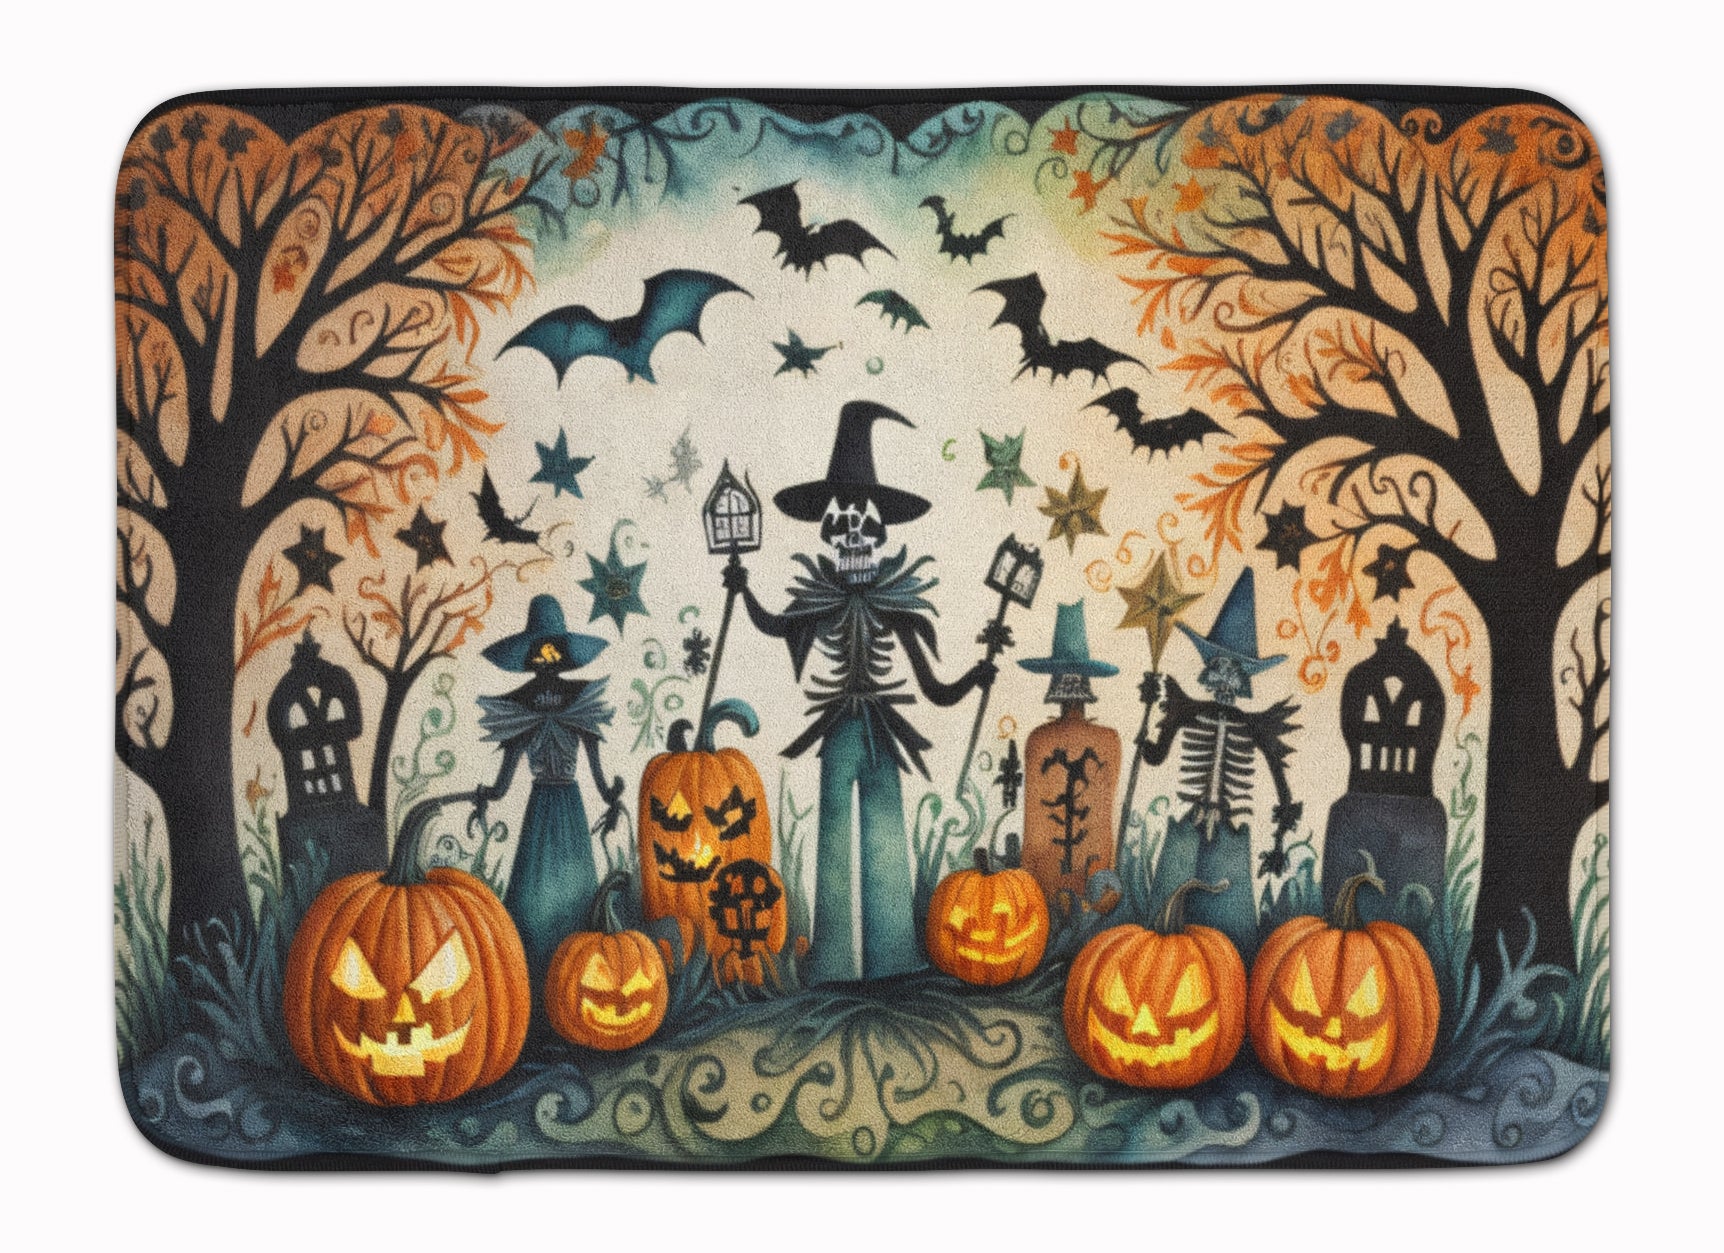 Buy this Papel Picado Skeletons Spooky Halloween Memory Foam Kitchen Mat